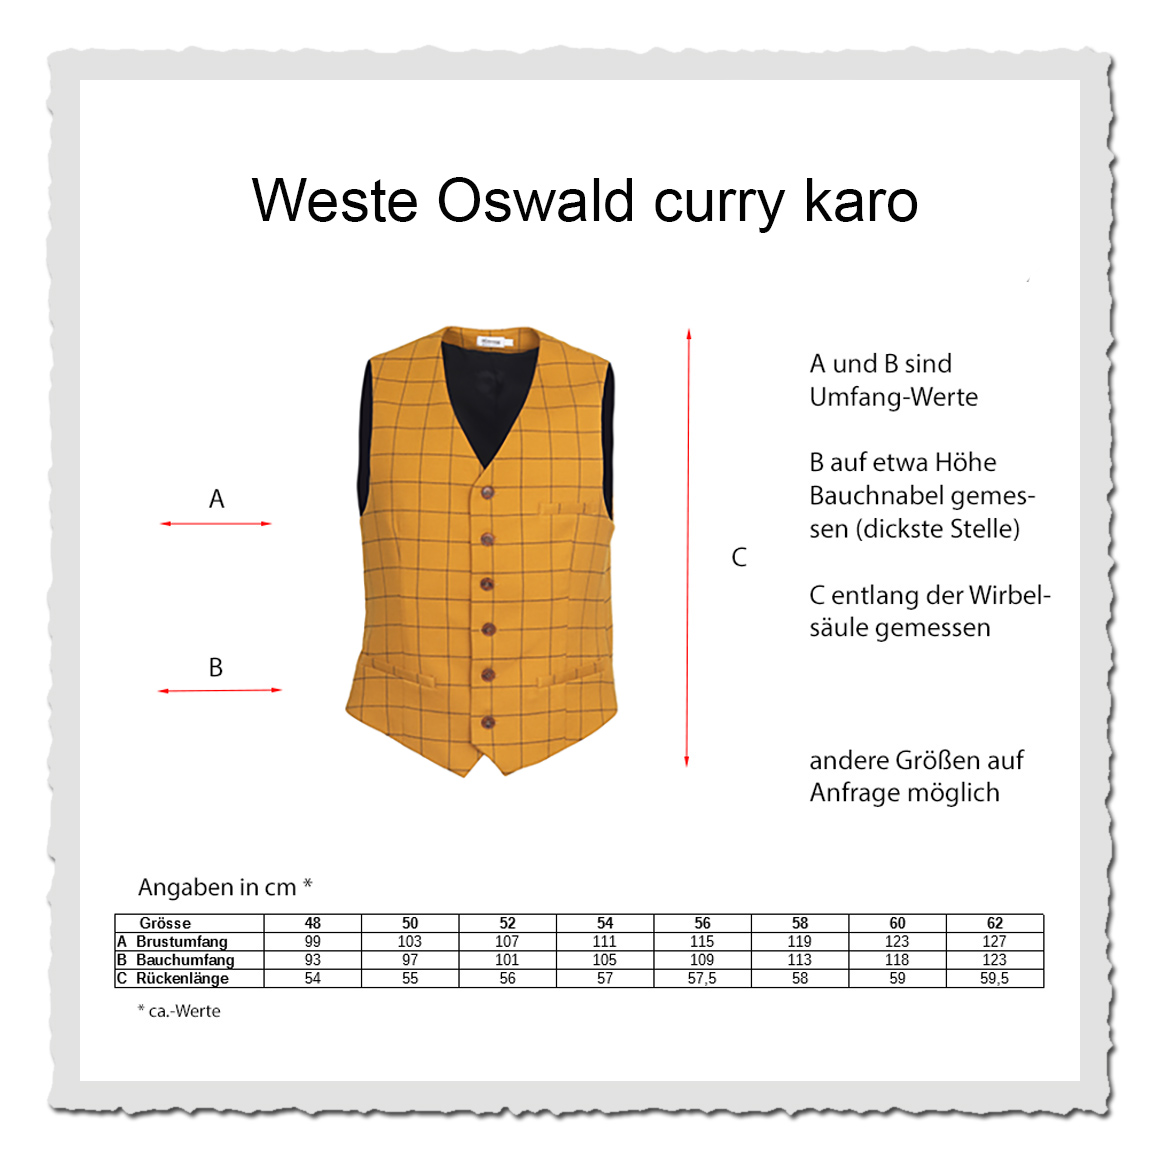 Herren-Weste Oswald curry karo